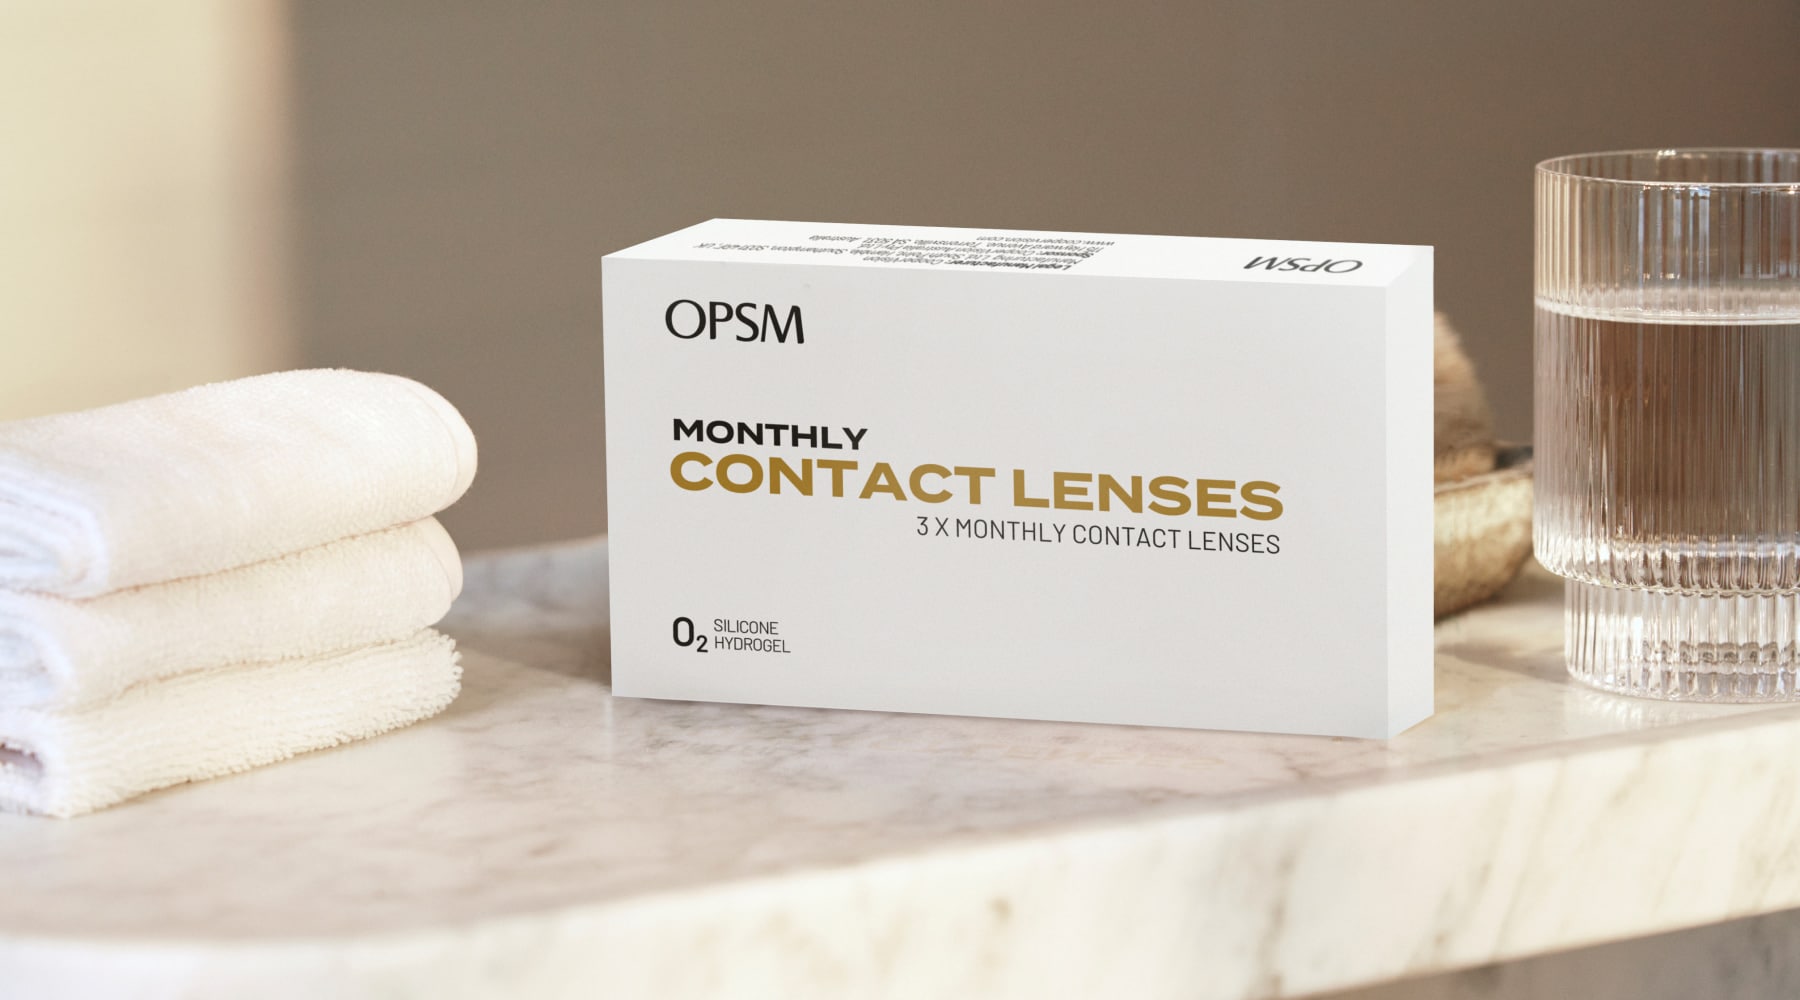 A contact lenses box